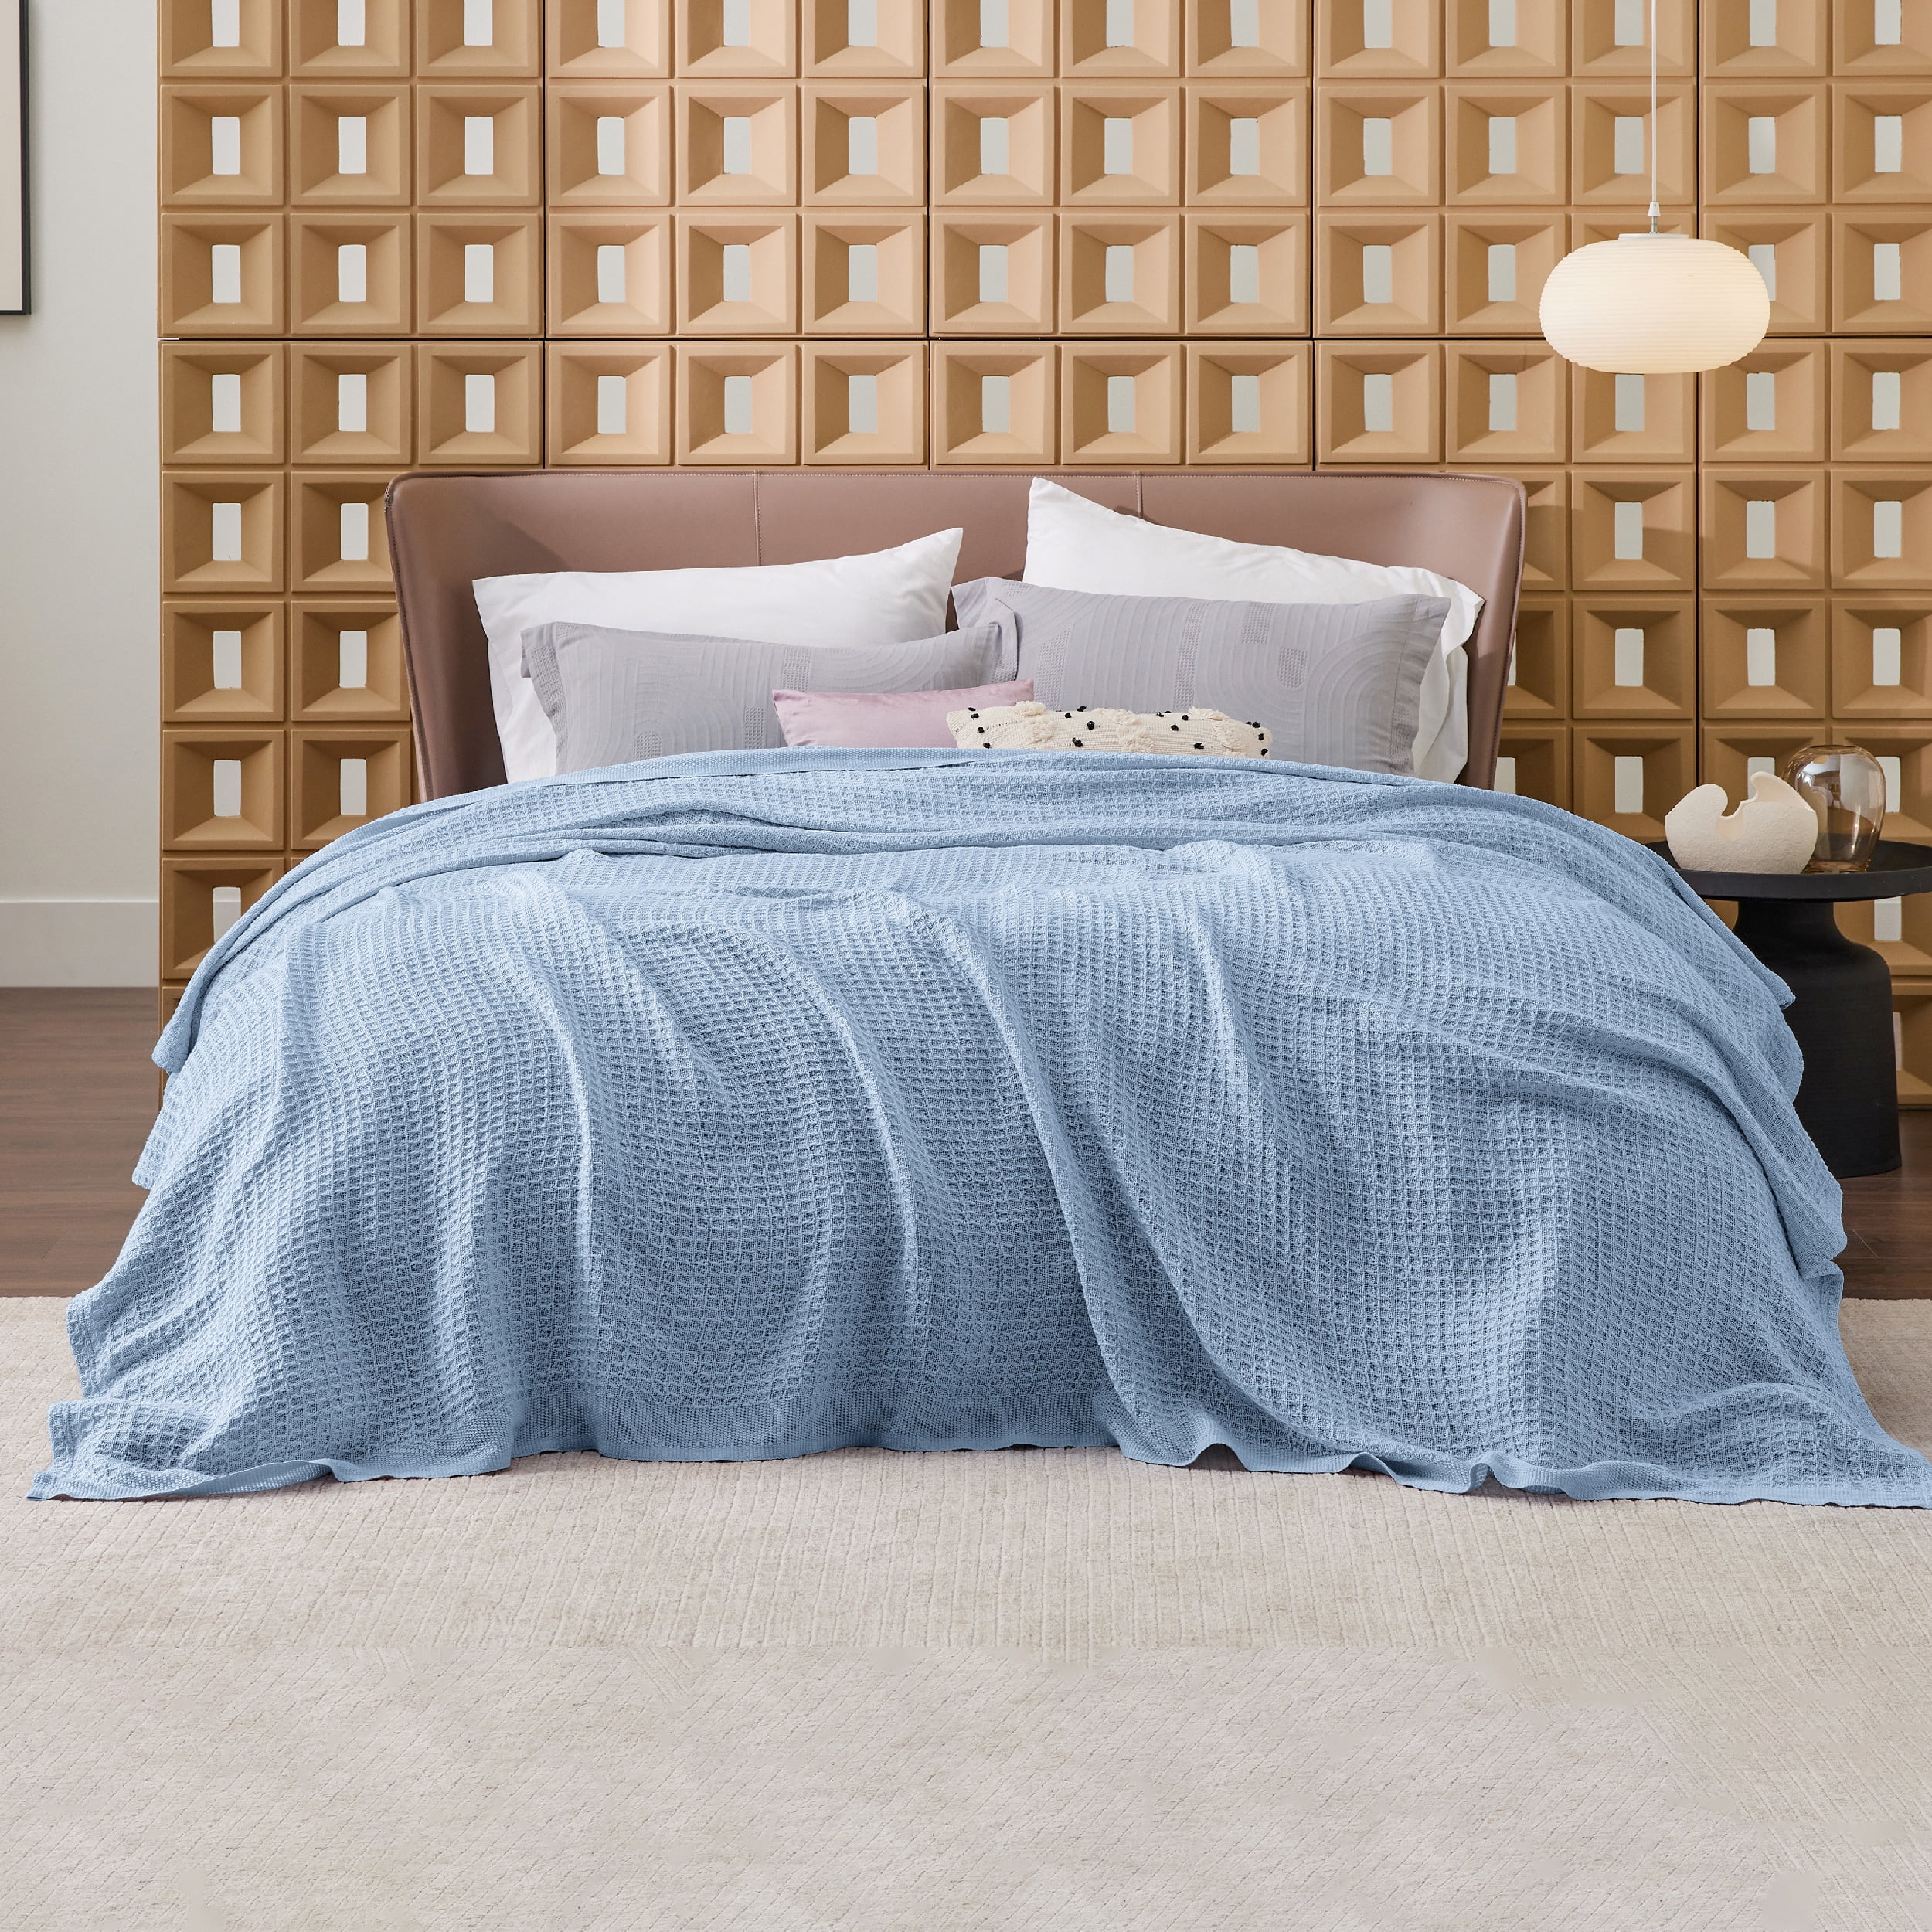 Bedsure 100% Cotton Blankets Queen Grey - Waffle Weave